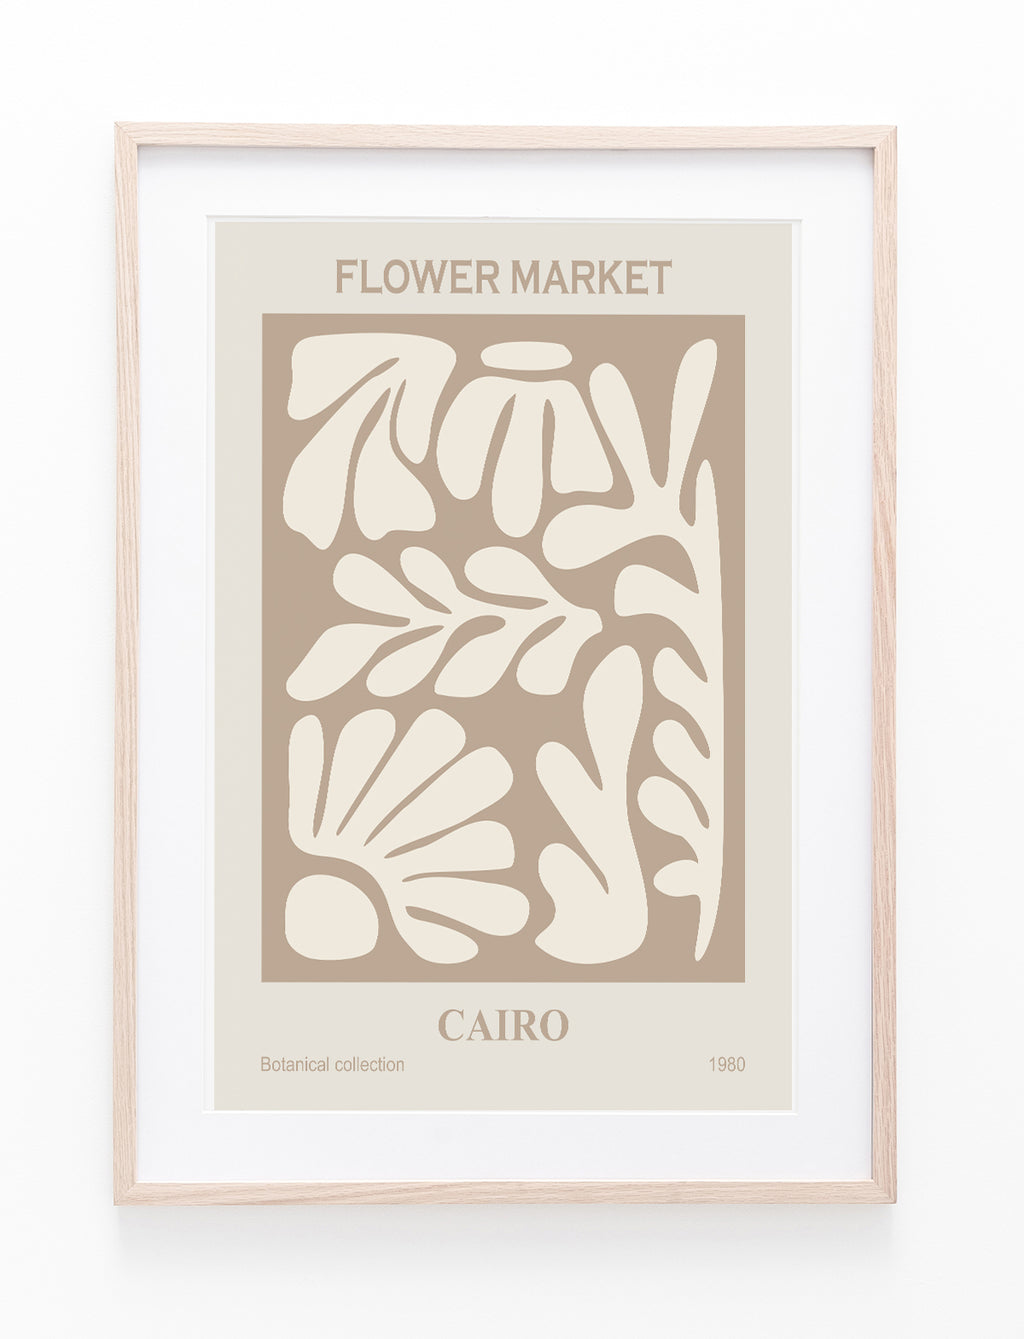 Flower Market Ciaro